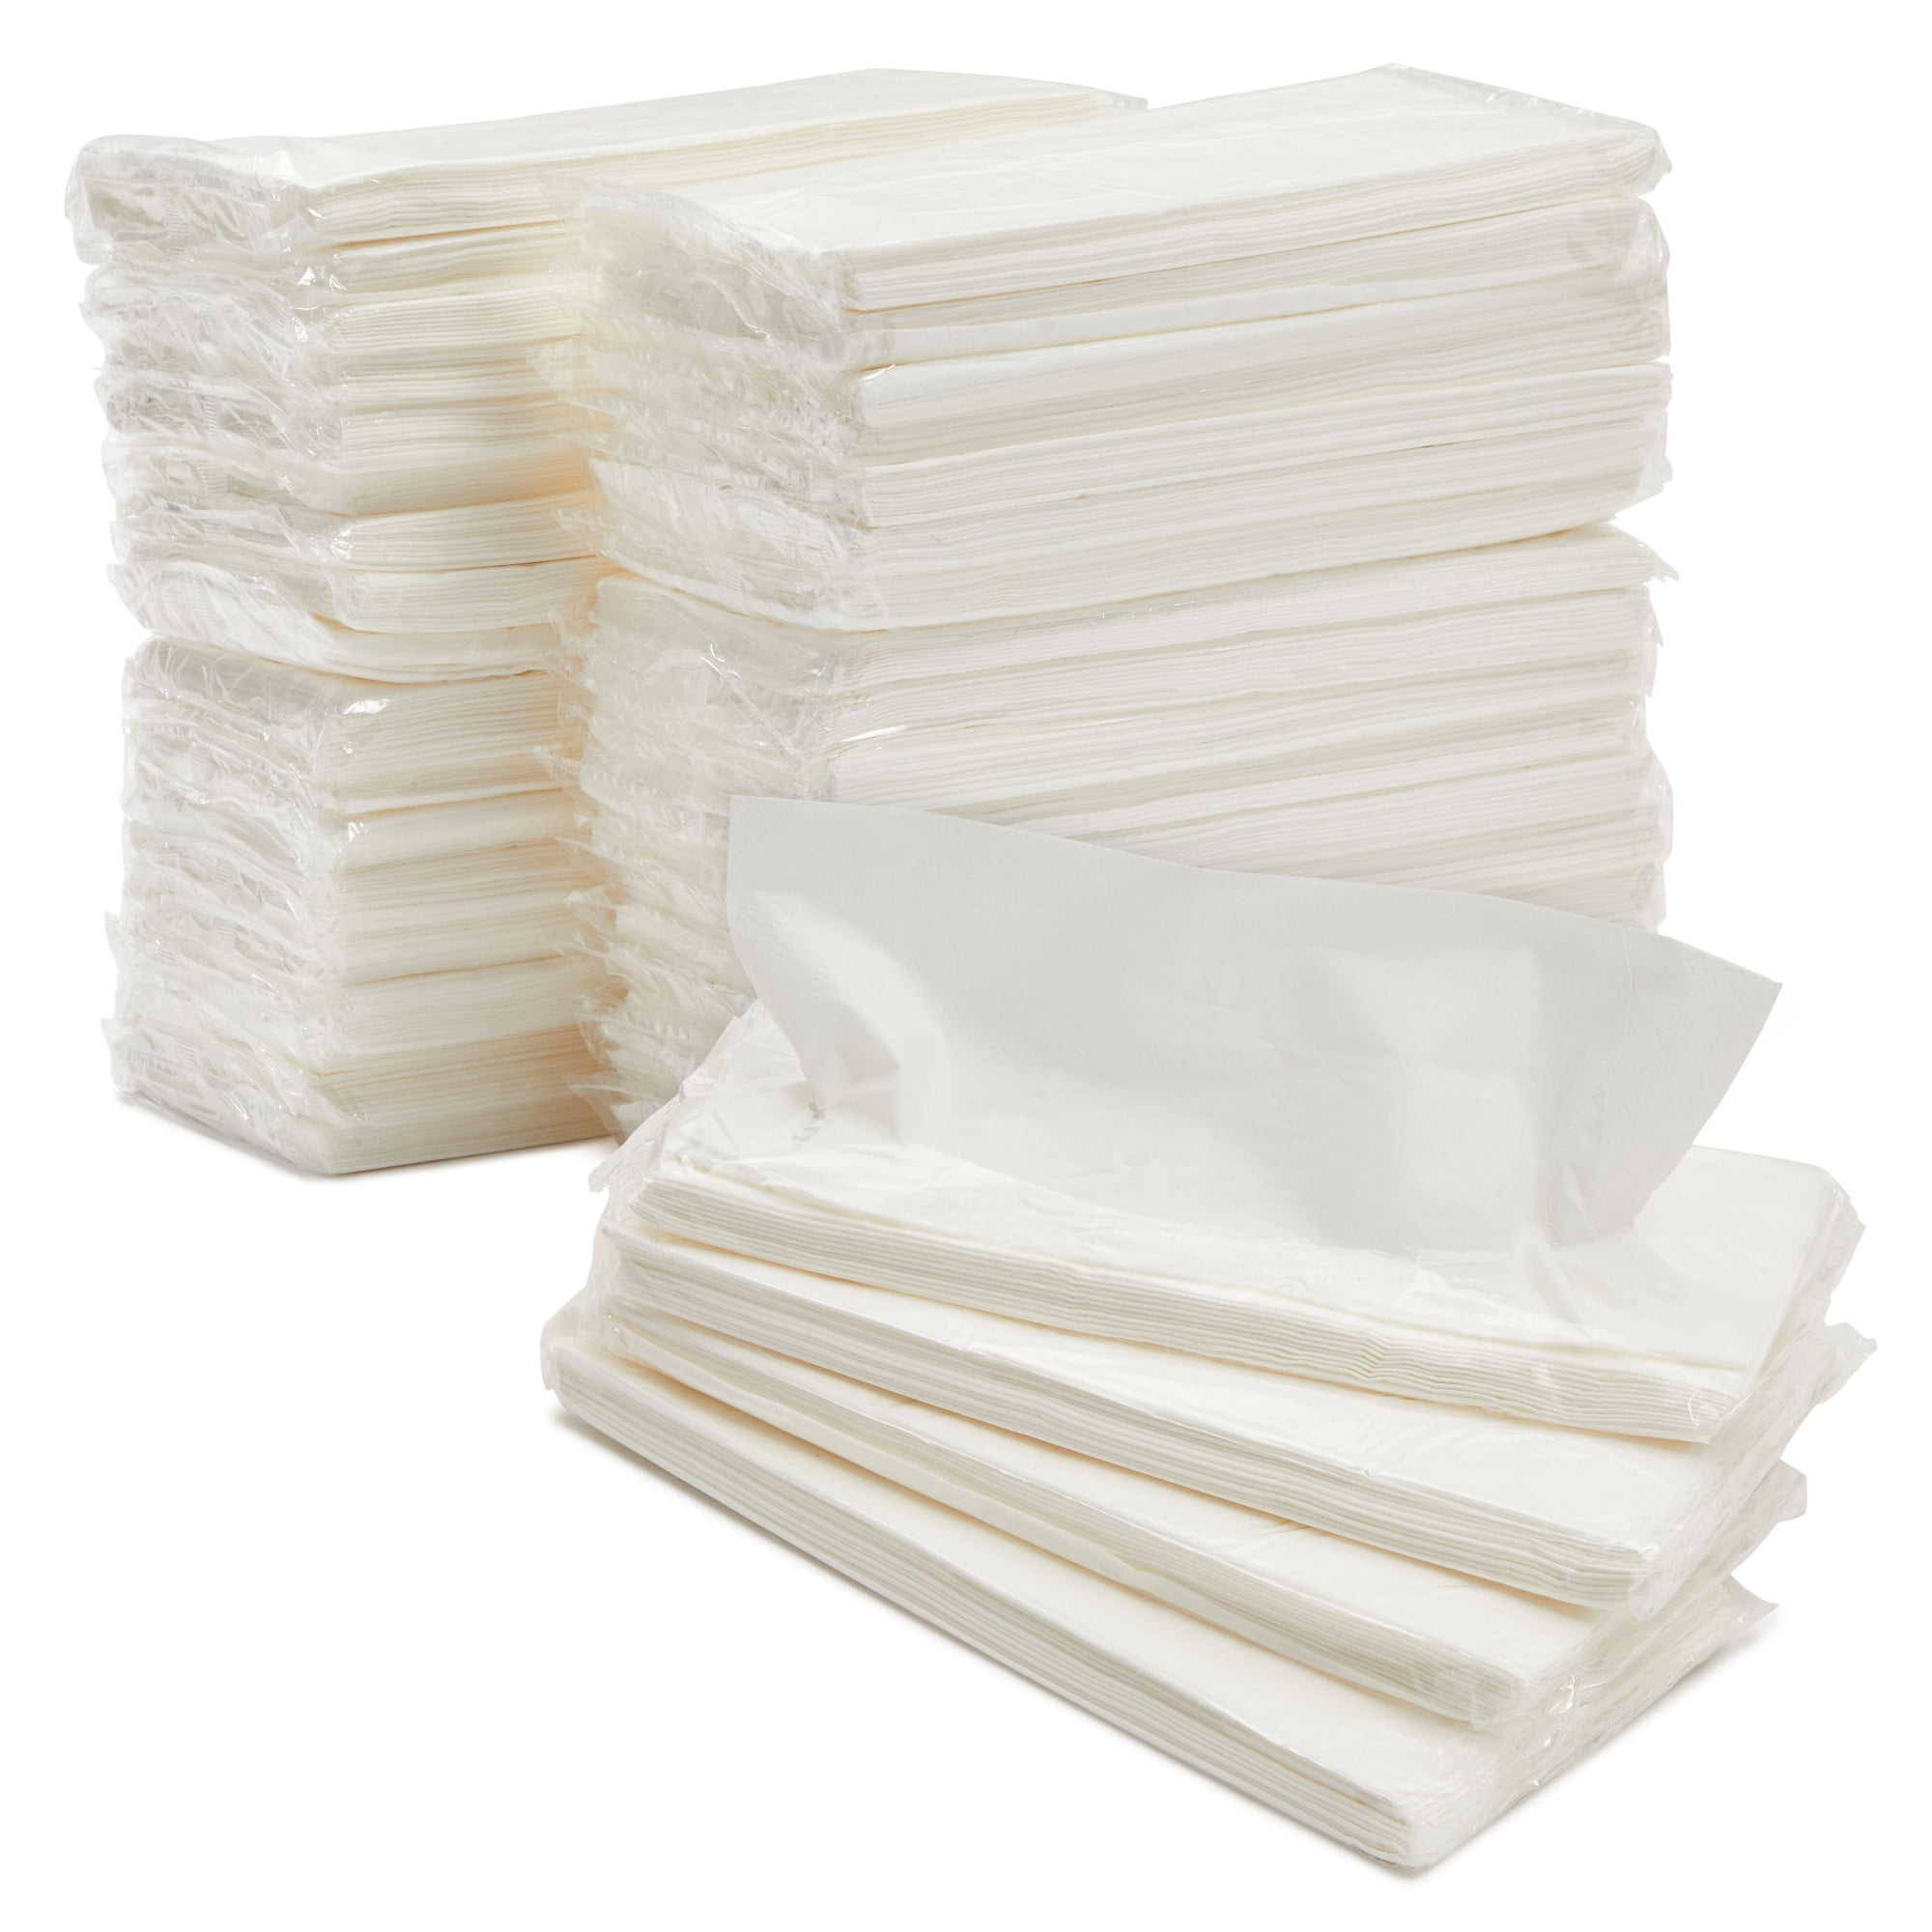 HOMELIA - Car Tissues boxes - Tissues for Car - Travel Tissues